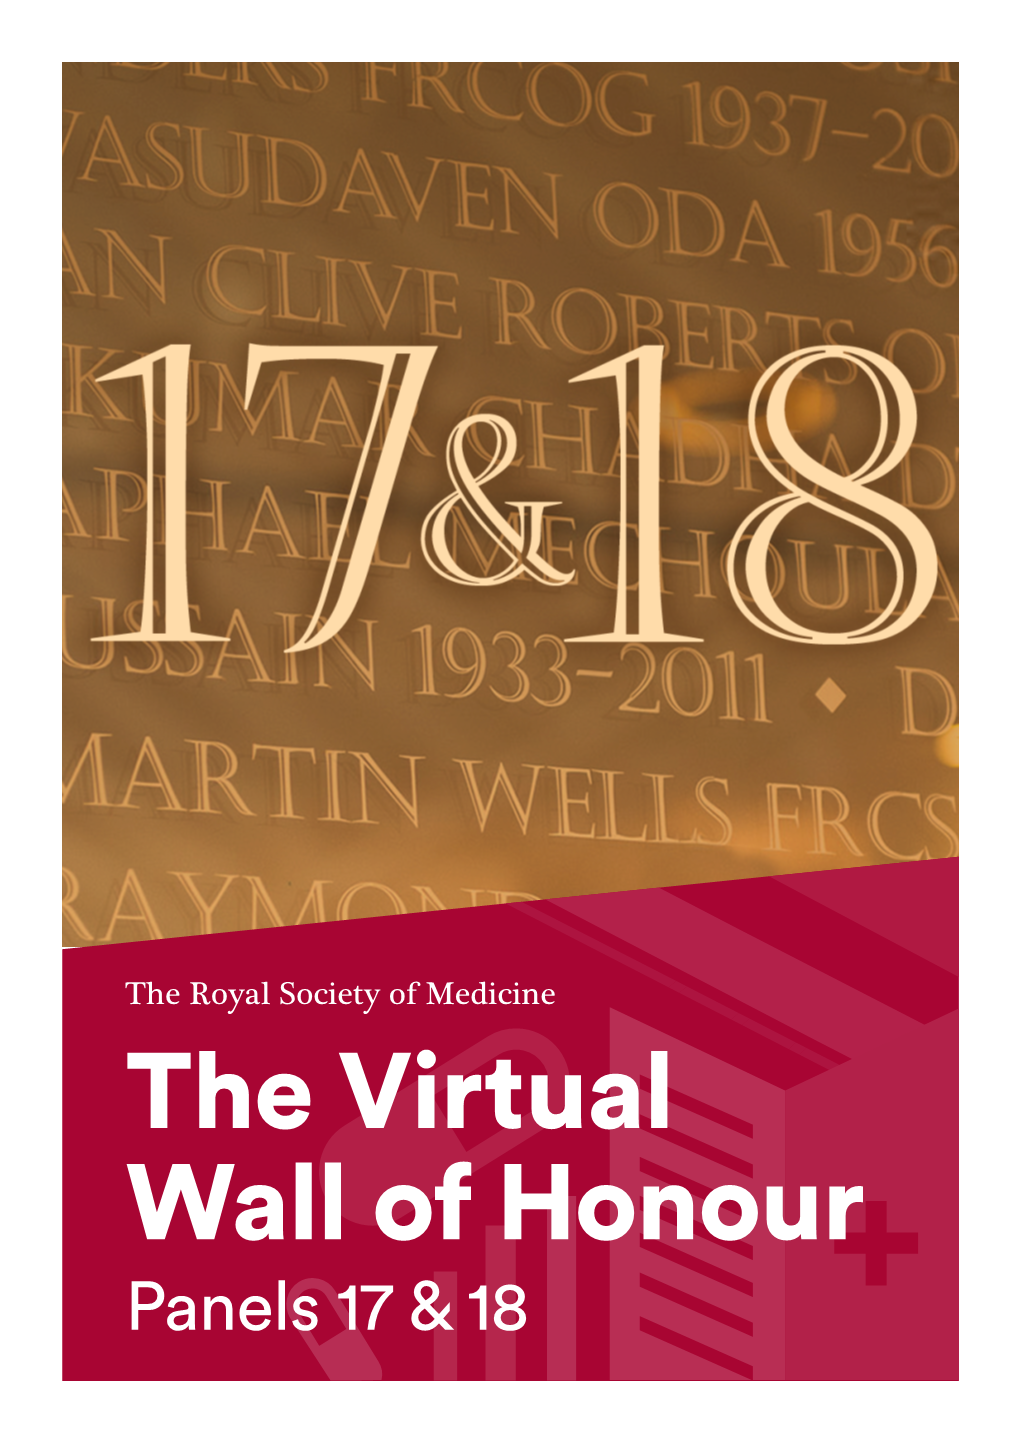 The Virtual Wall of Honour Panels 17 & 18 Virtual Wall of Honour Panel 17 Dates Honoured by Testimonials Professor Richard (JROC) Collin Read Testimonial